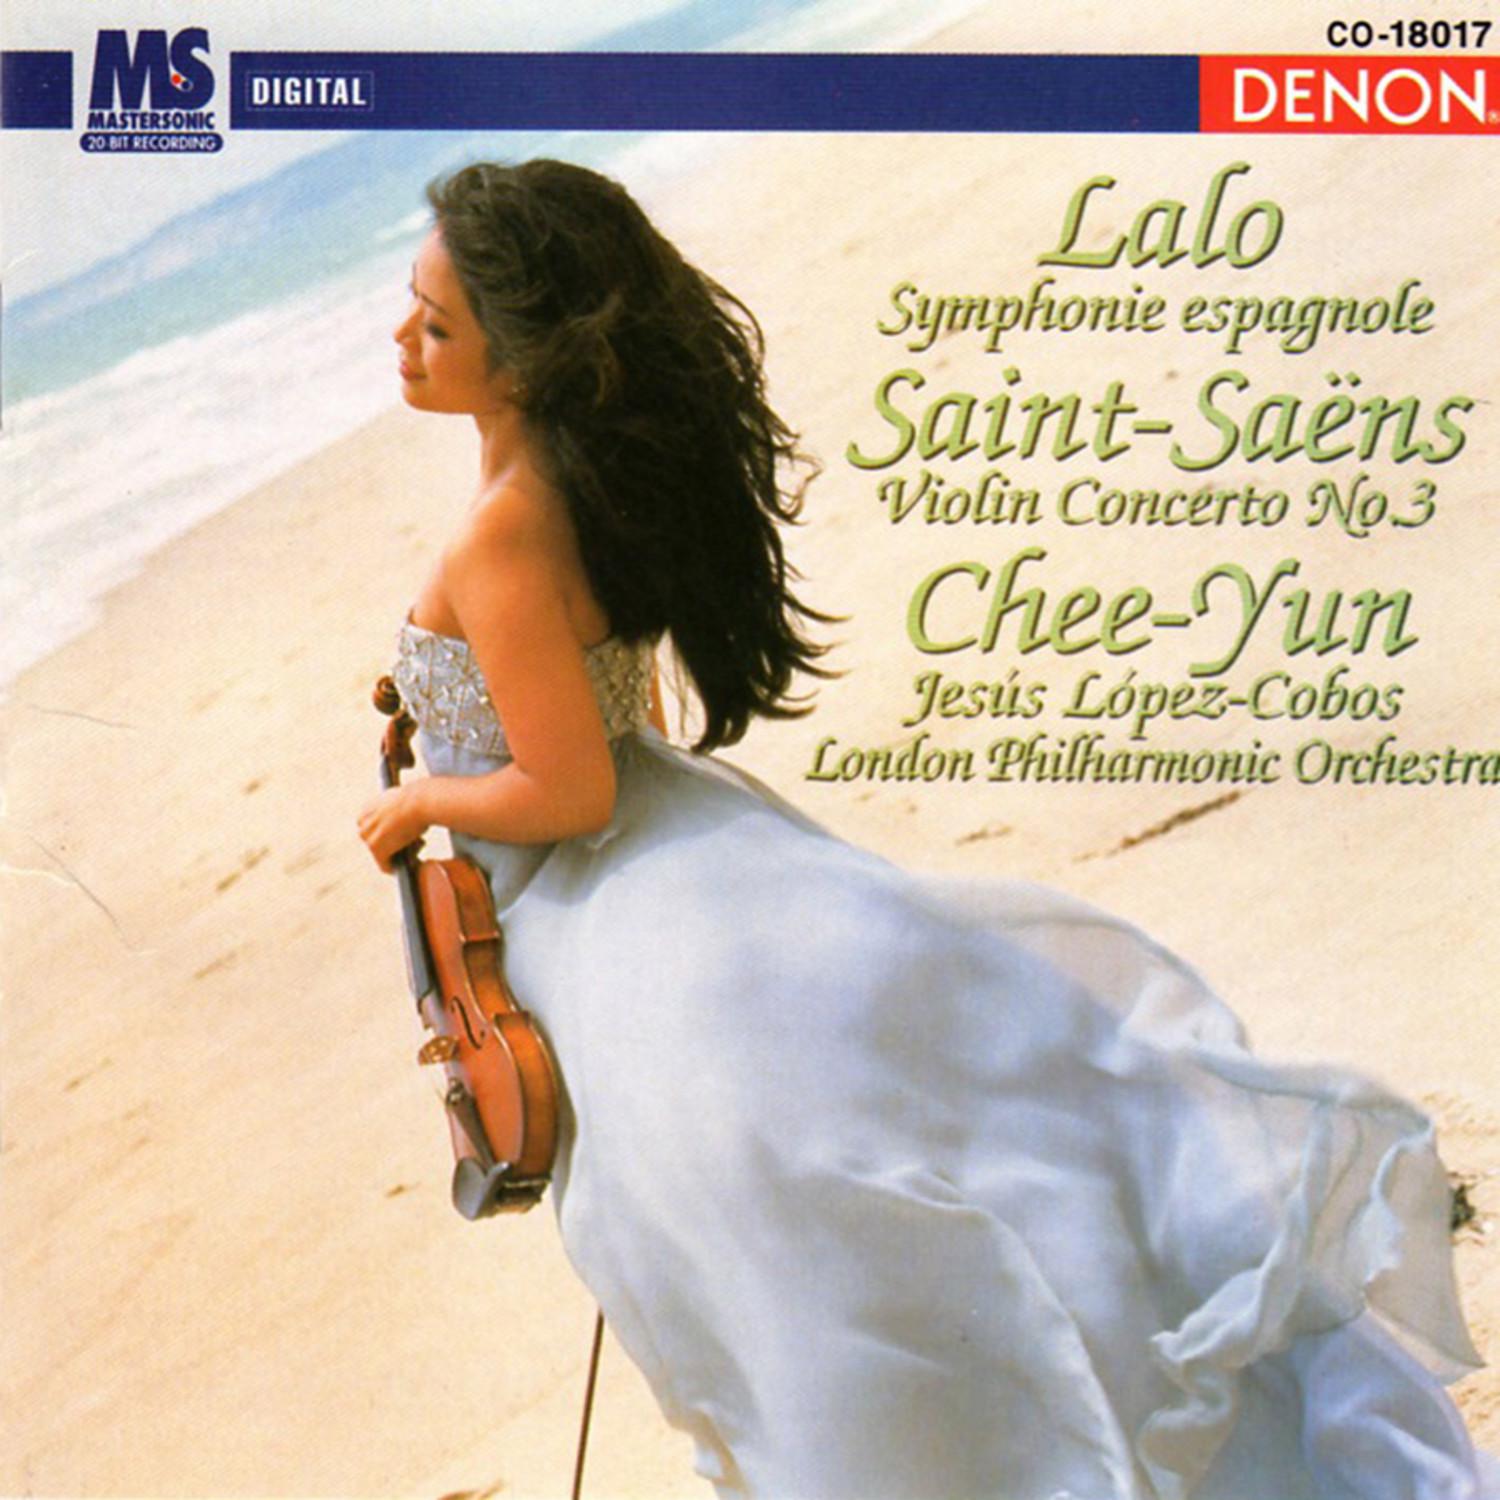 Lalo: Symphonie espagnole & Saint-Saens: Violin Concerto No. 3